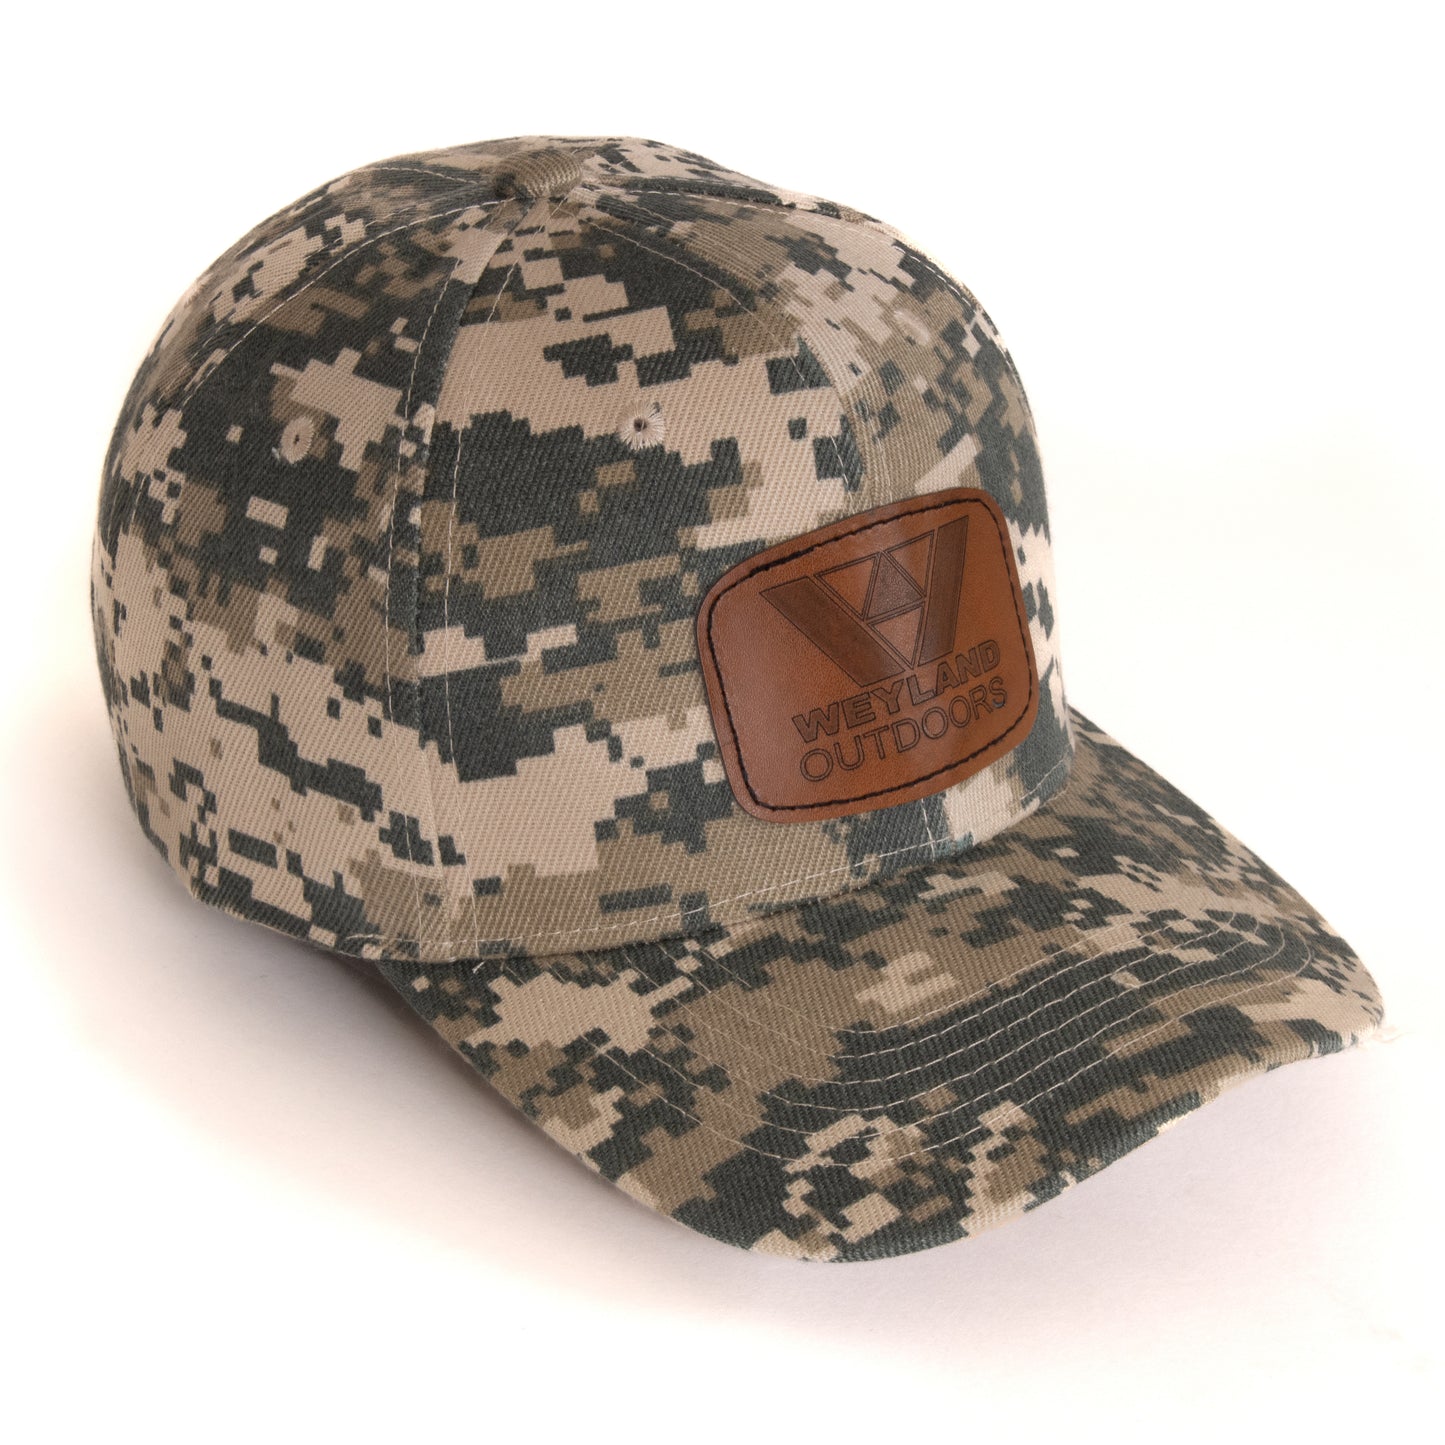 Weyland Outdoors Hat - Digital Camo